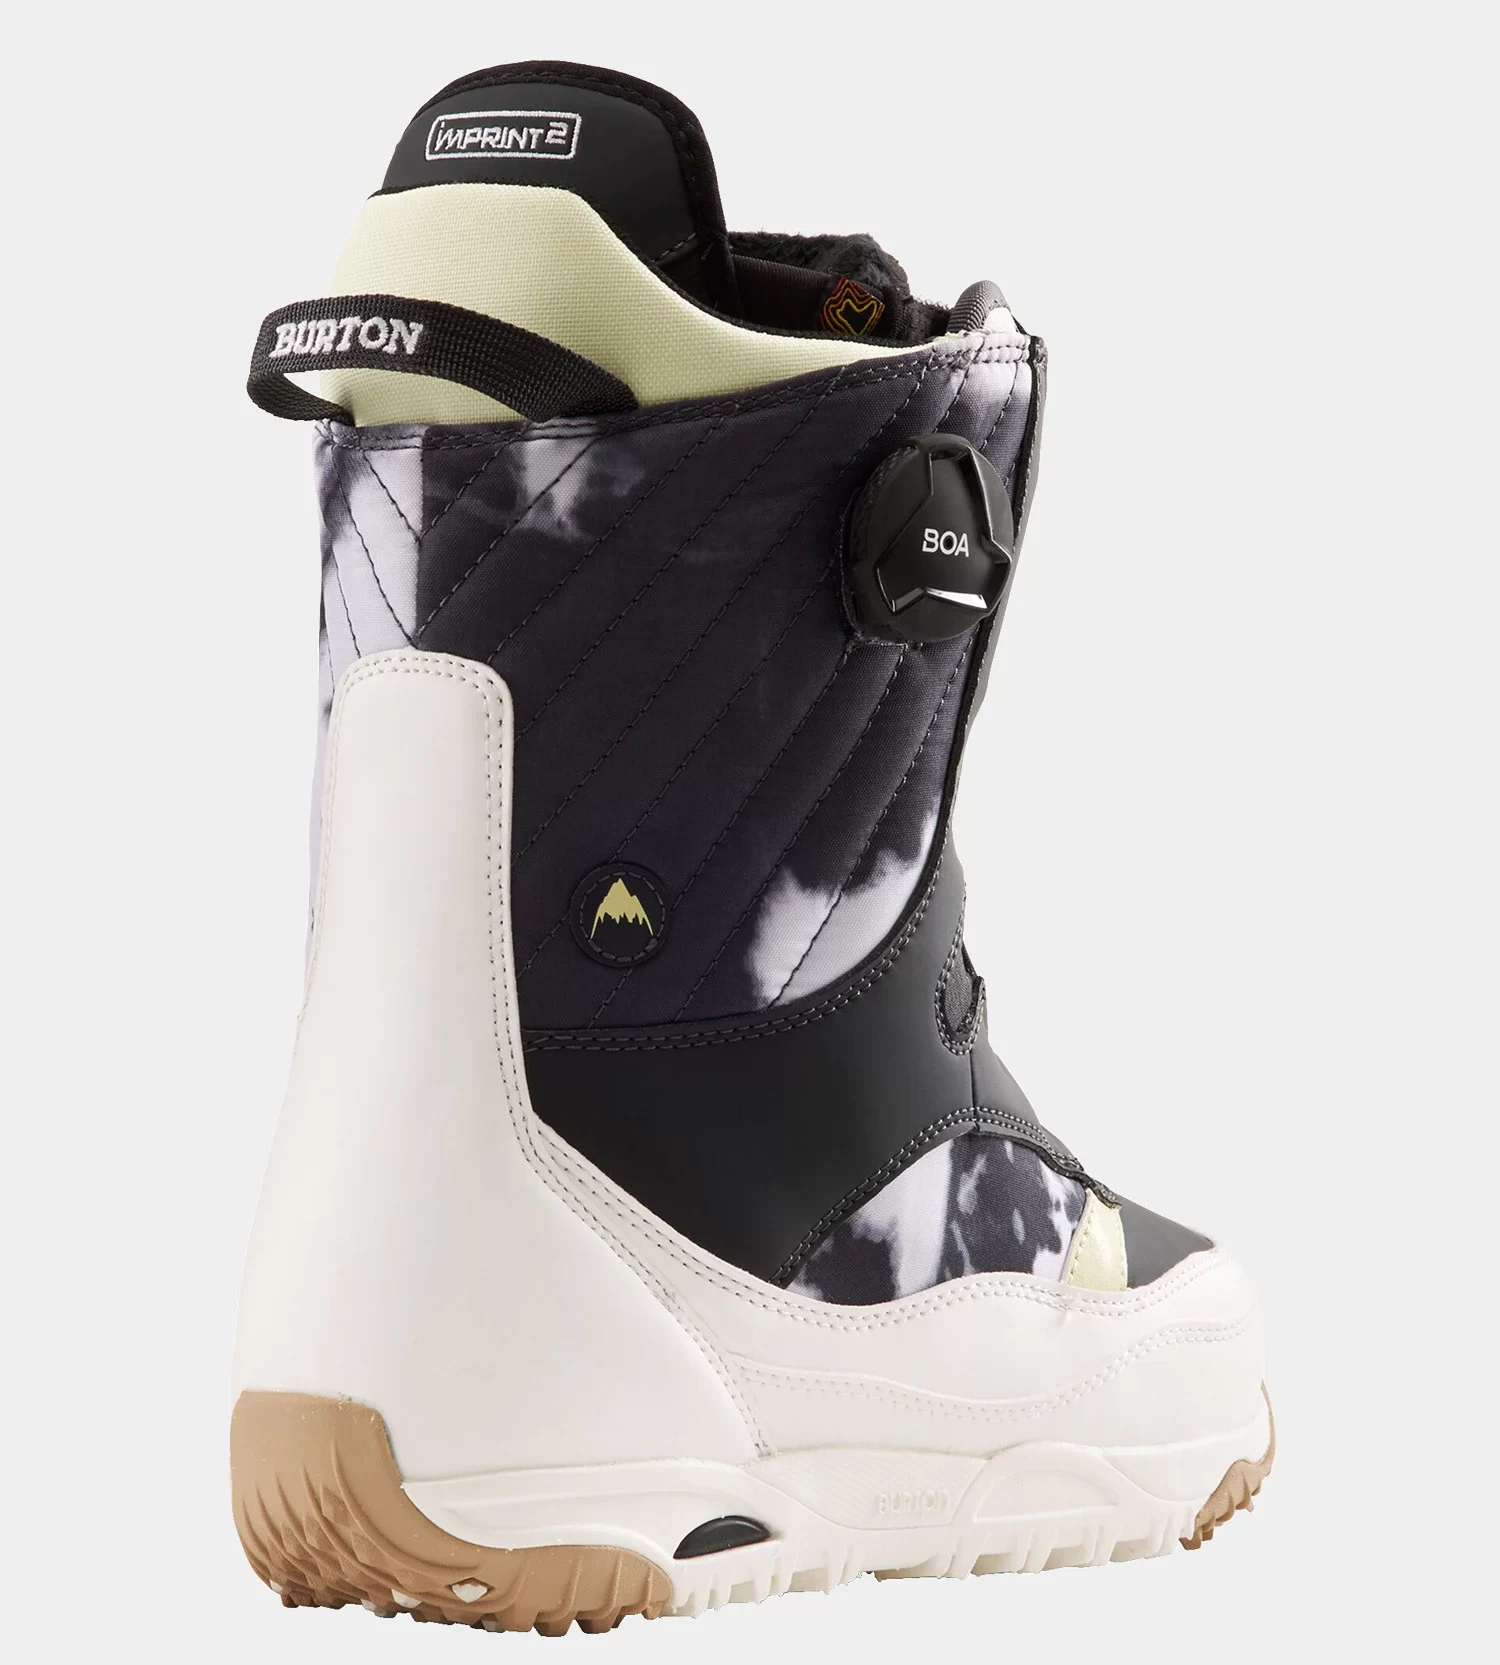 1258031-burton-limelight-boa-snowboard-boots-wmn-stout-wht-acid-wash-w1920w